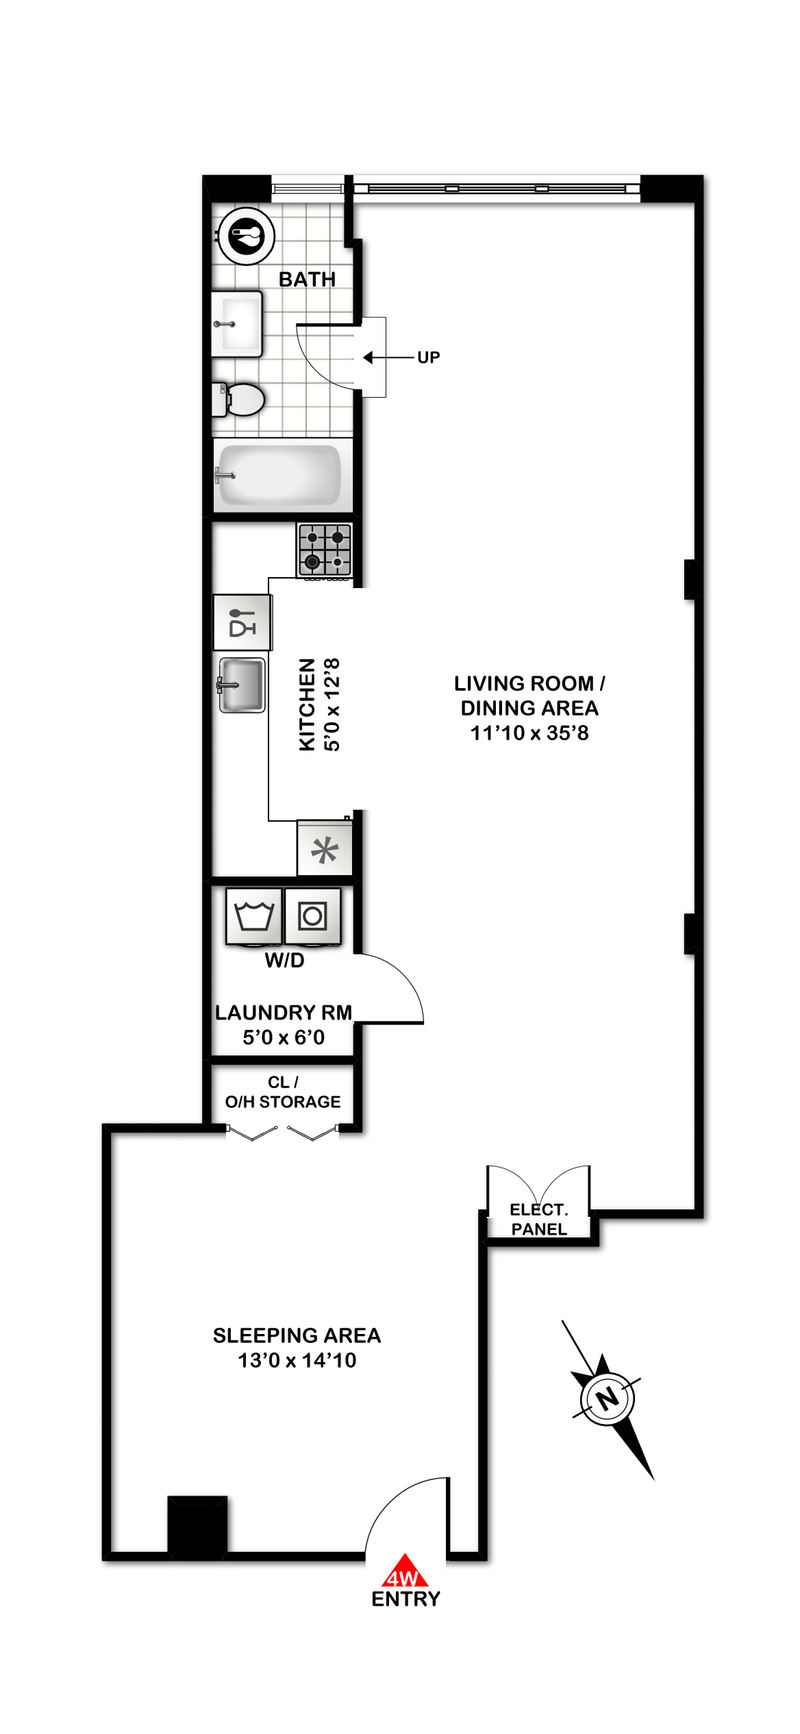 Floorplan for 49 East 1st Street